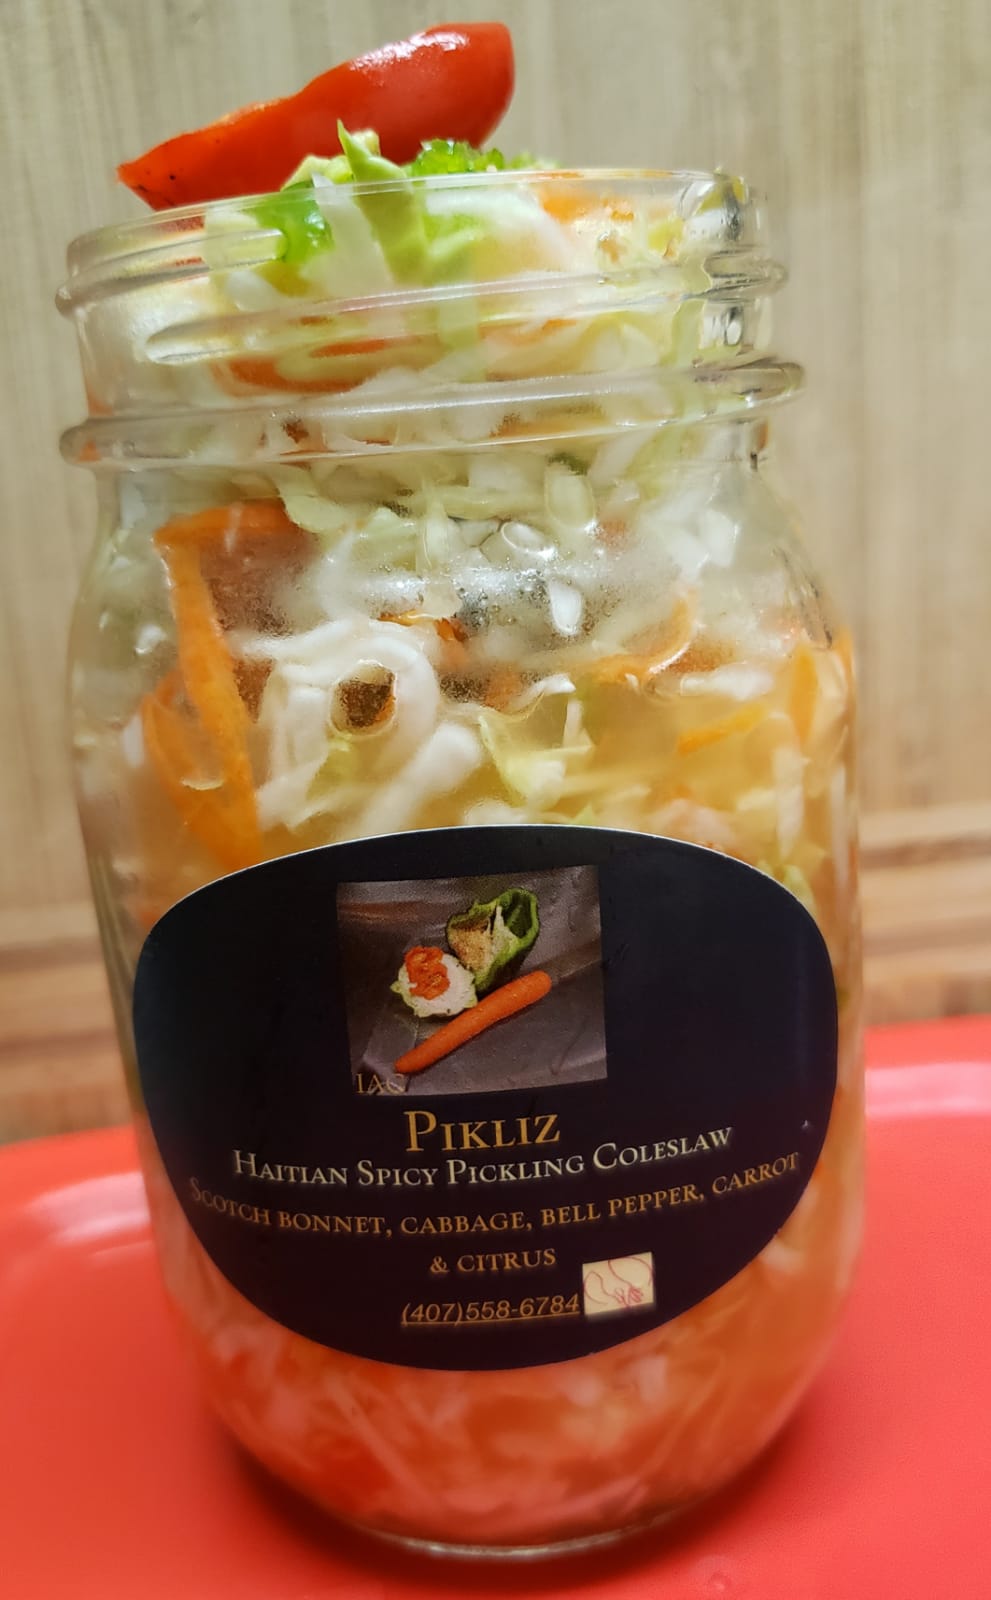 Pikliz (Haitian spicy pickling coleslaw)